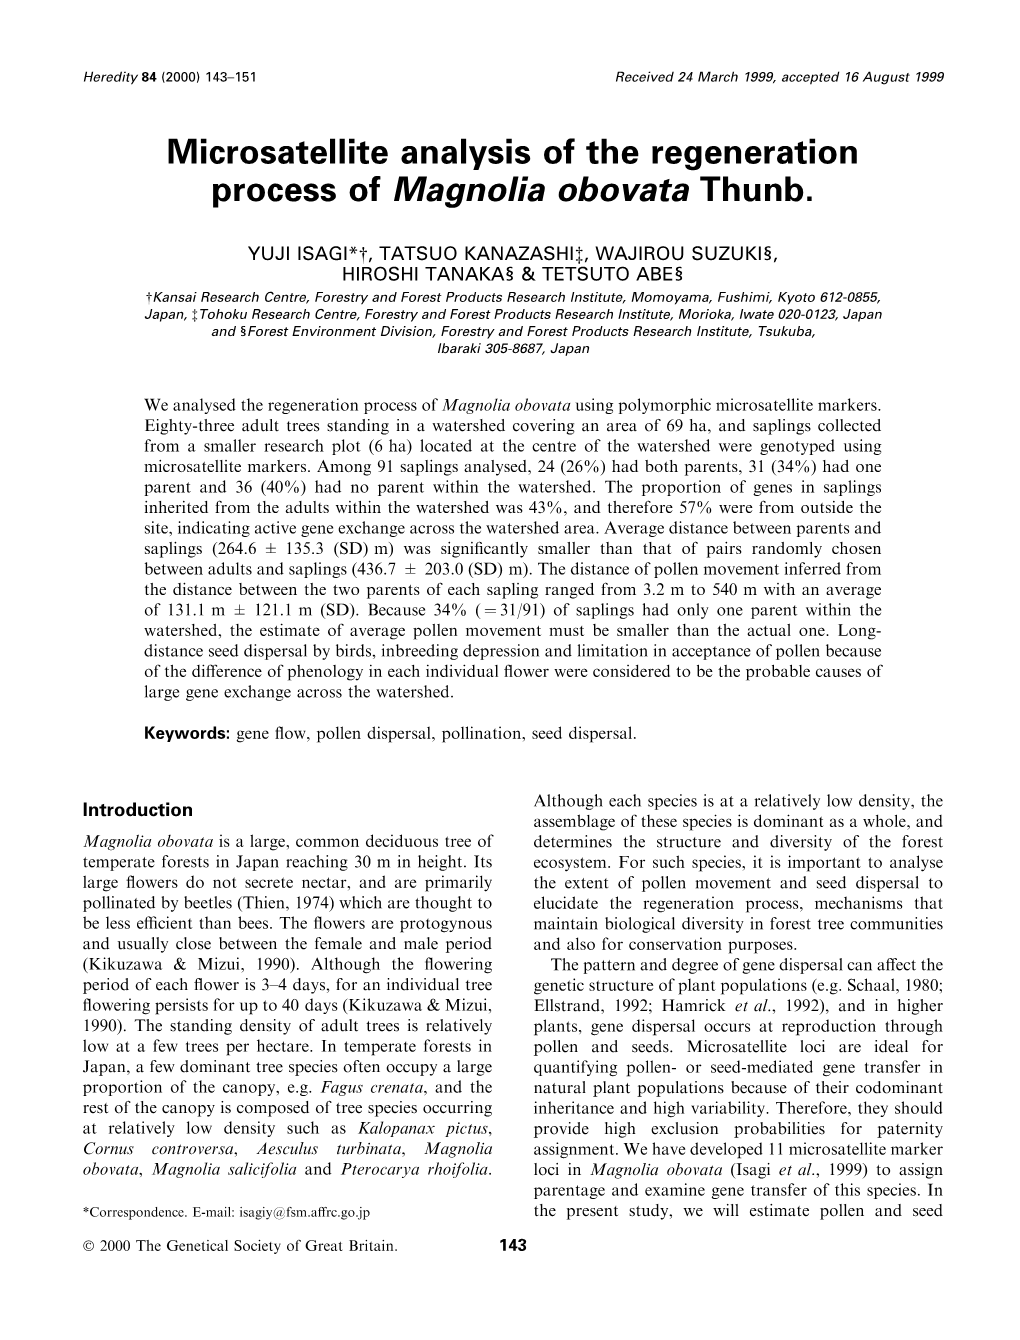 Microsatellite Analysis of the Regeneration Process of Magnolia Obovata Thunb